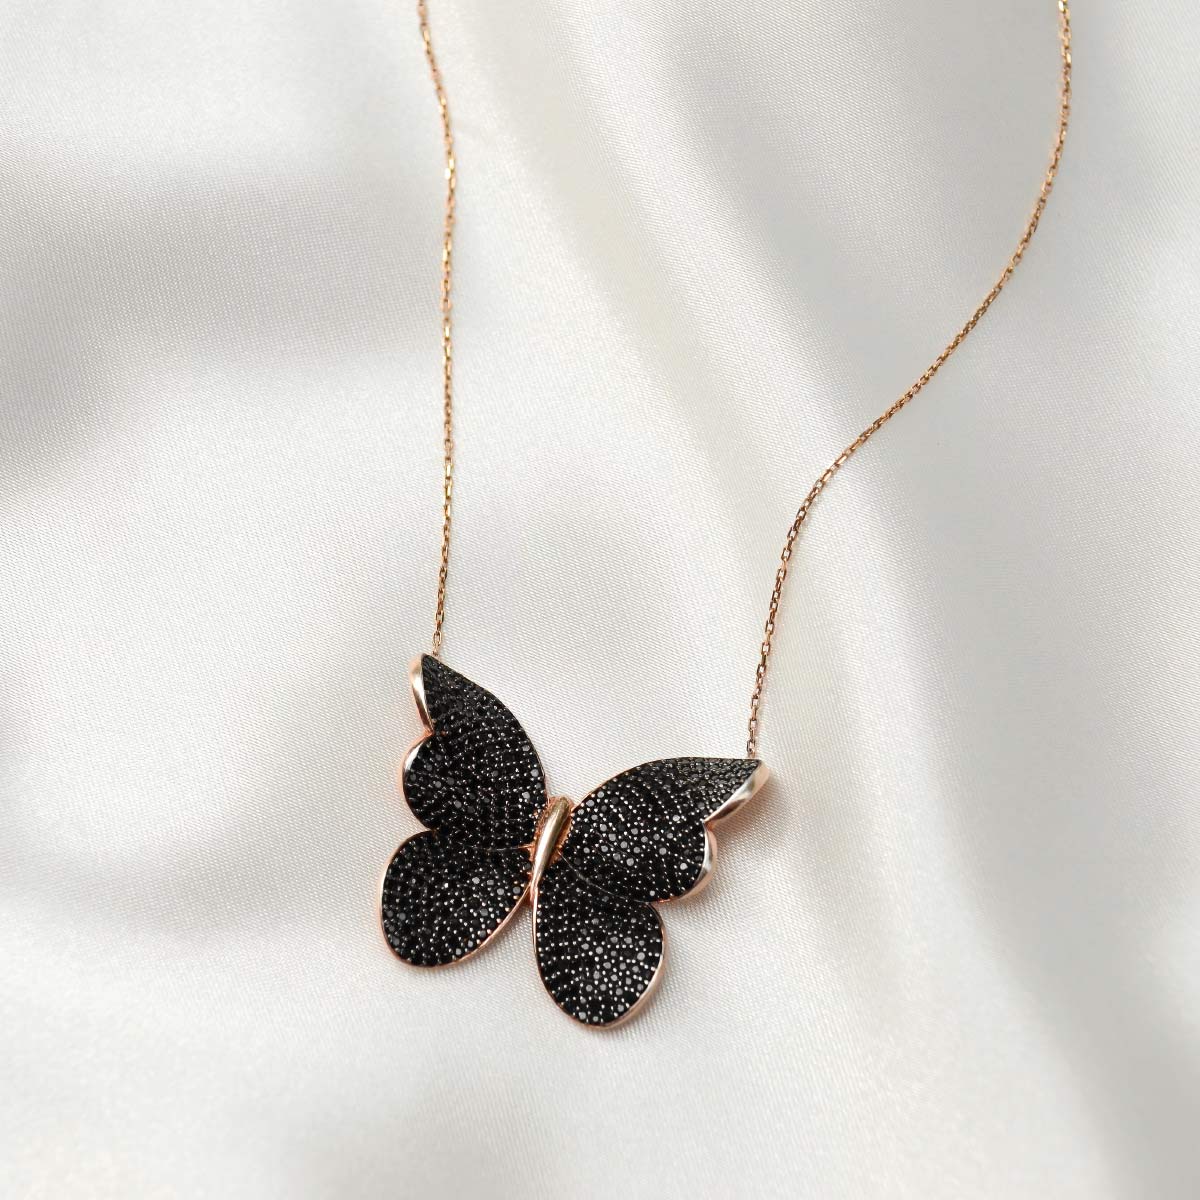 BUY 1 GET 1 FREE - Black Crystal Butterfly Necklace + Night Fever Hoop Earrings